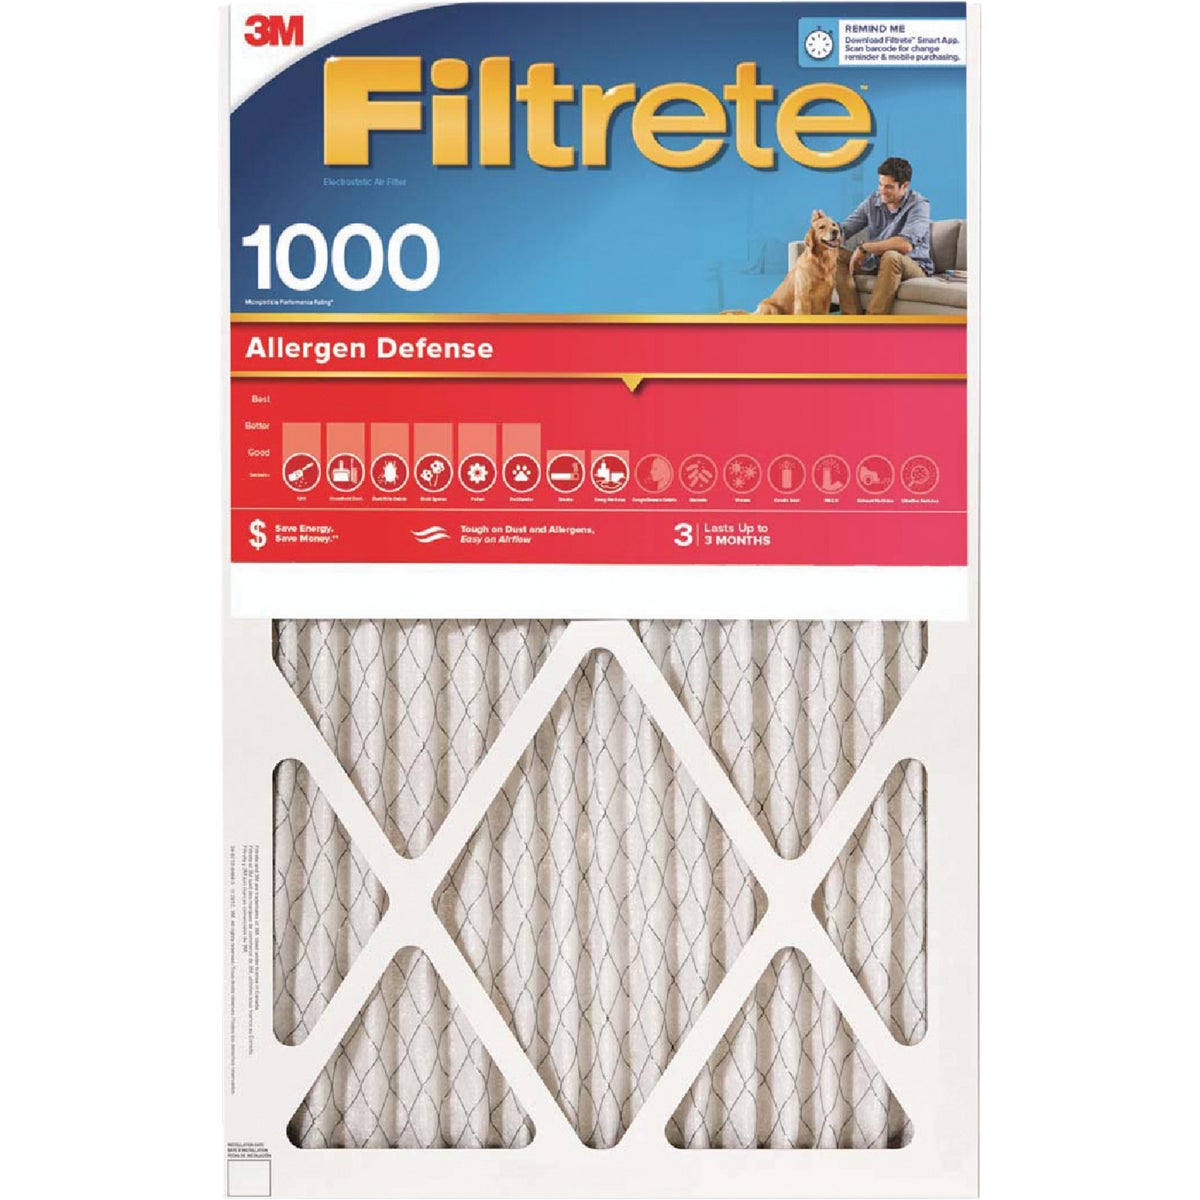 Filtrete 16 In. x 20 In. x 1 In. Allergen Defense 1000/1085 MPR Furnace Filter